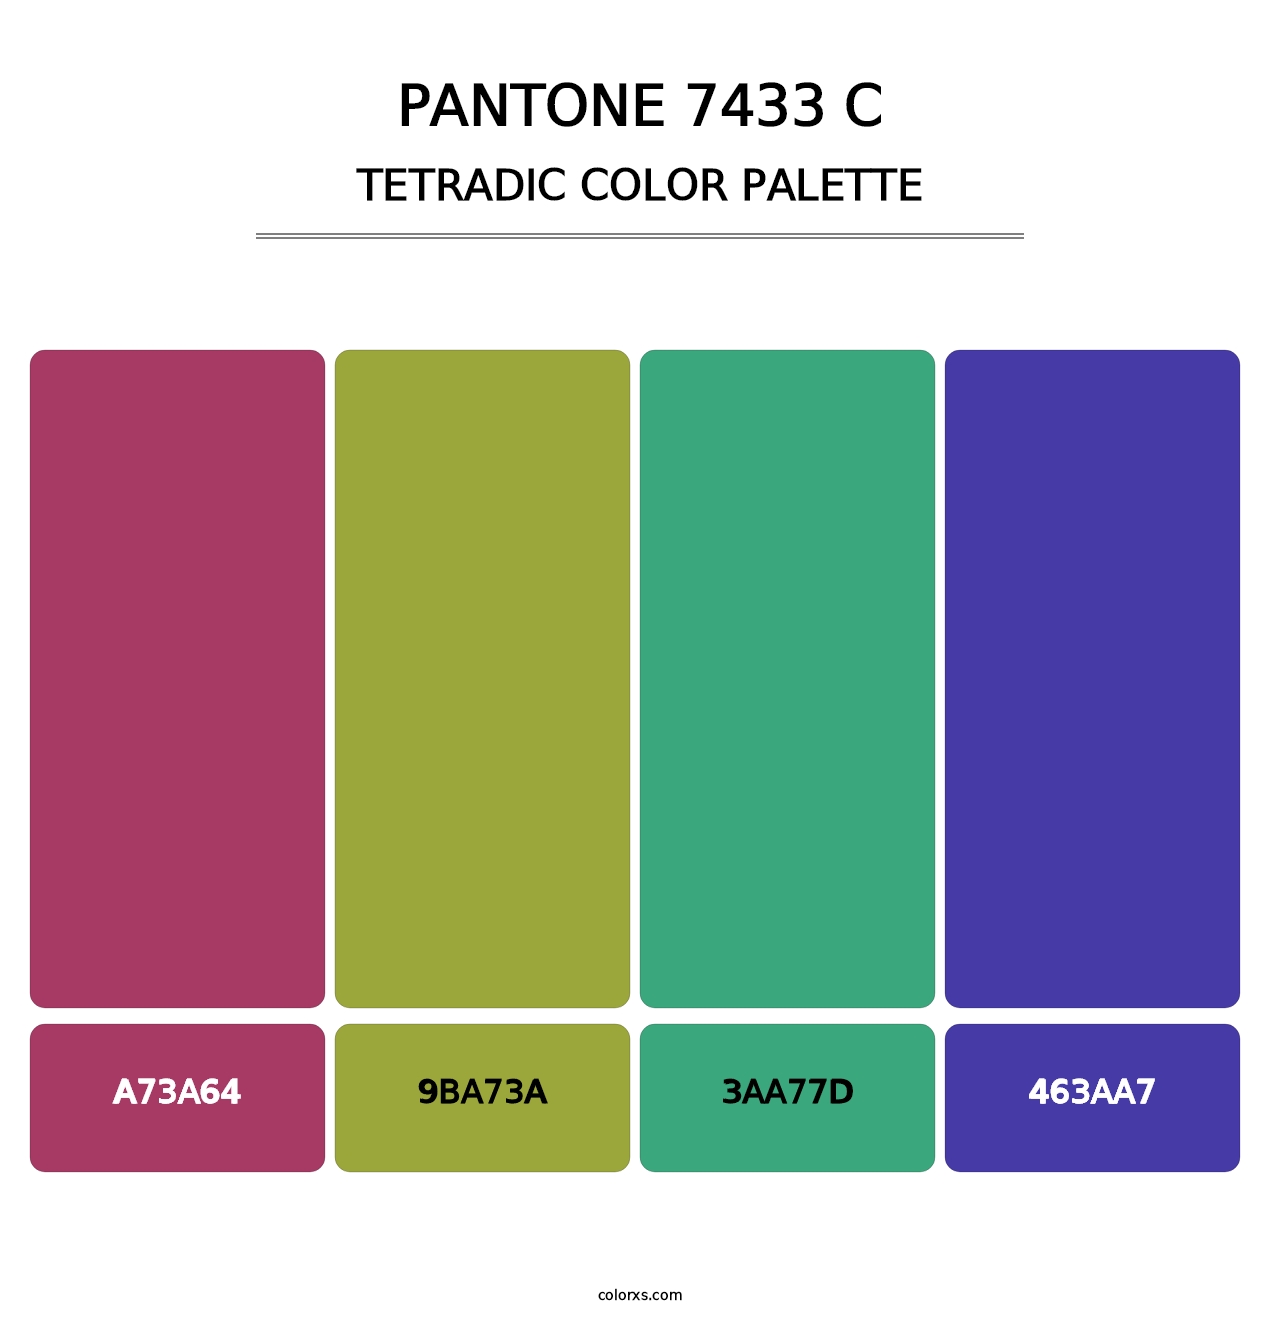 PANTONE 7433 C - Tetradic Color Palette